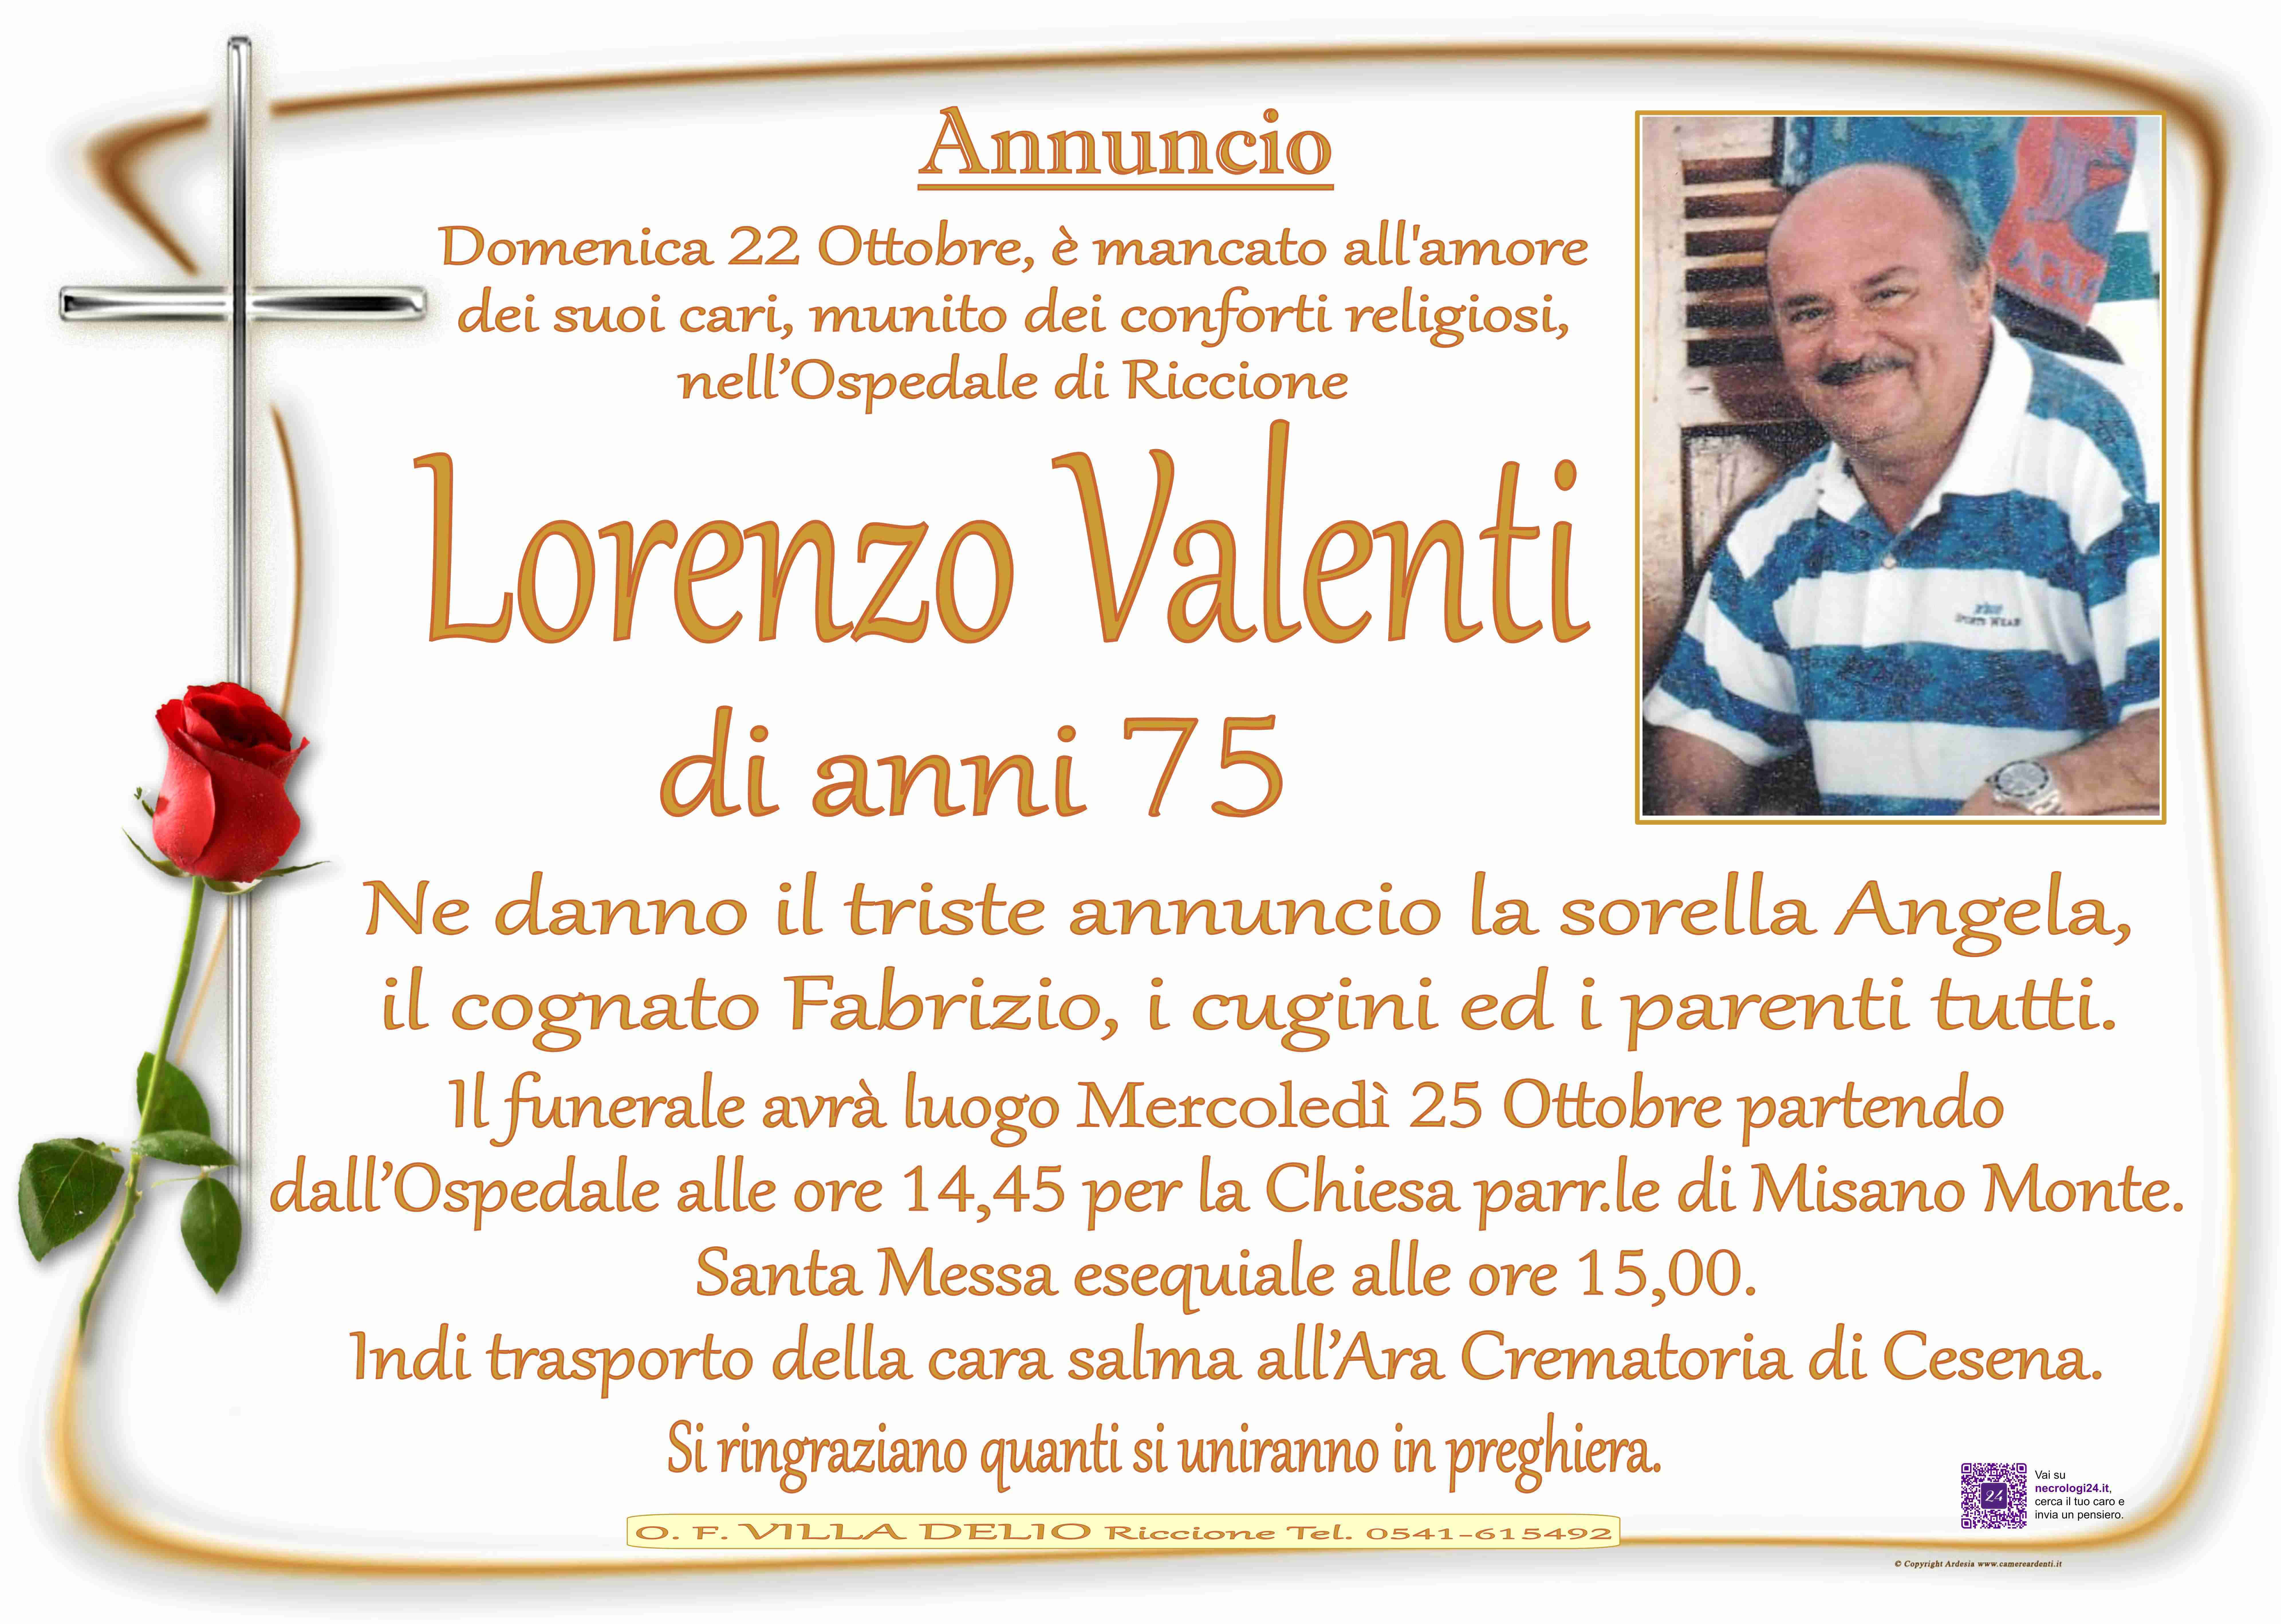 Lorenzo Valenti